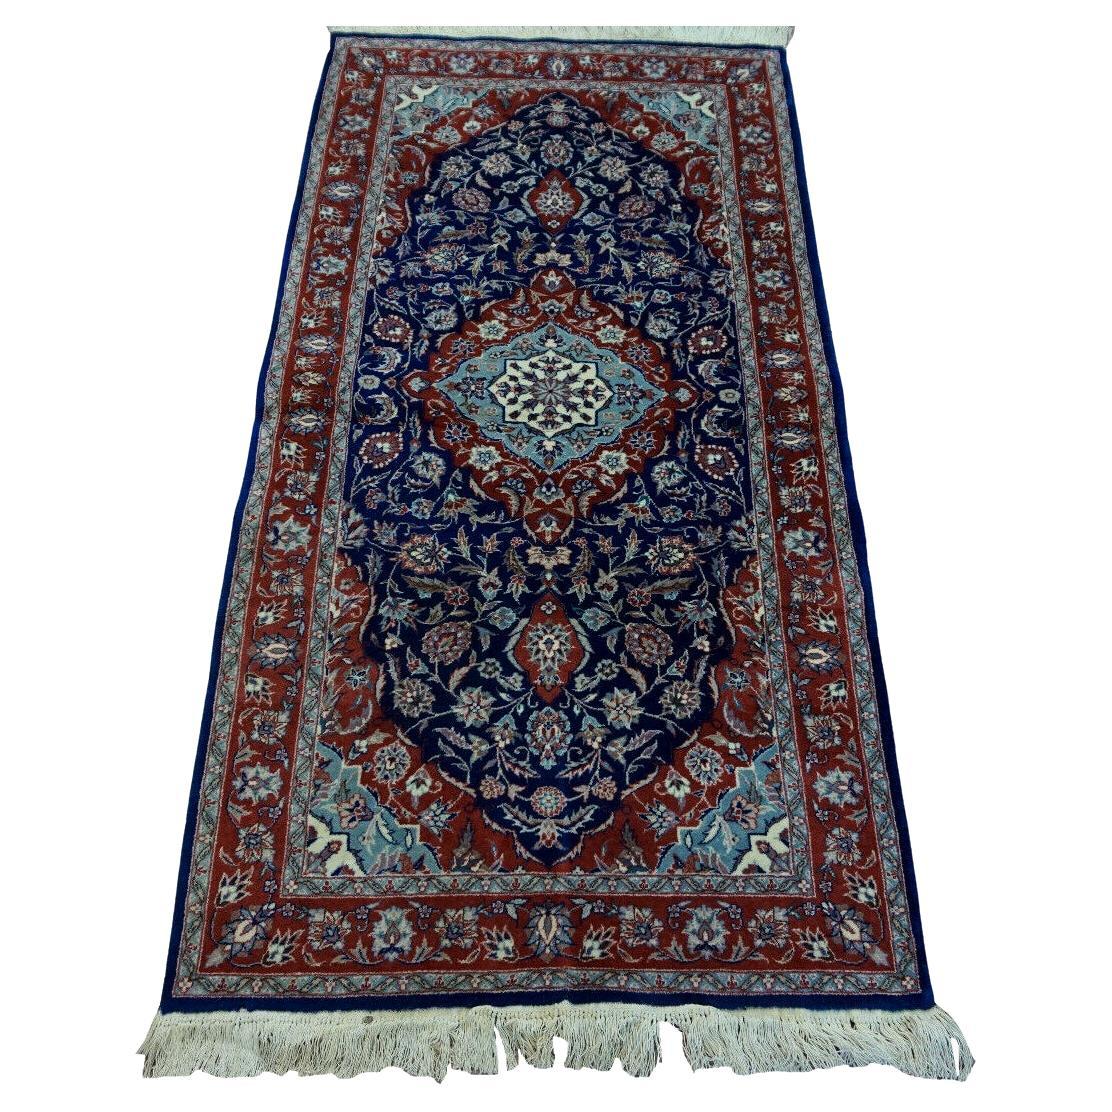 Handgefertigter Vintage-Teppich im Isfahan-Stil, 1970er Jahre, 1D21